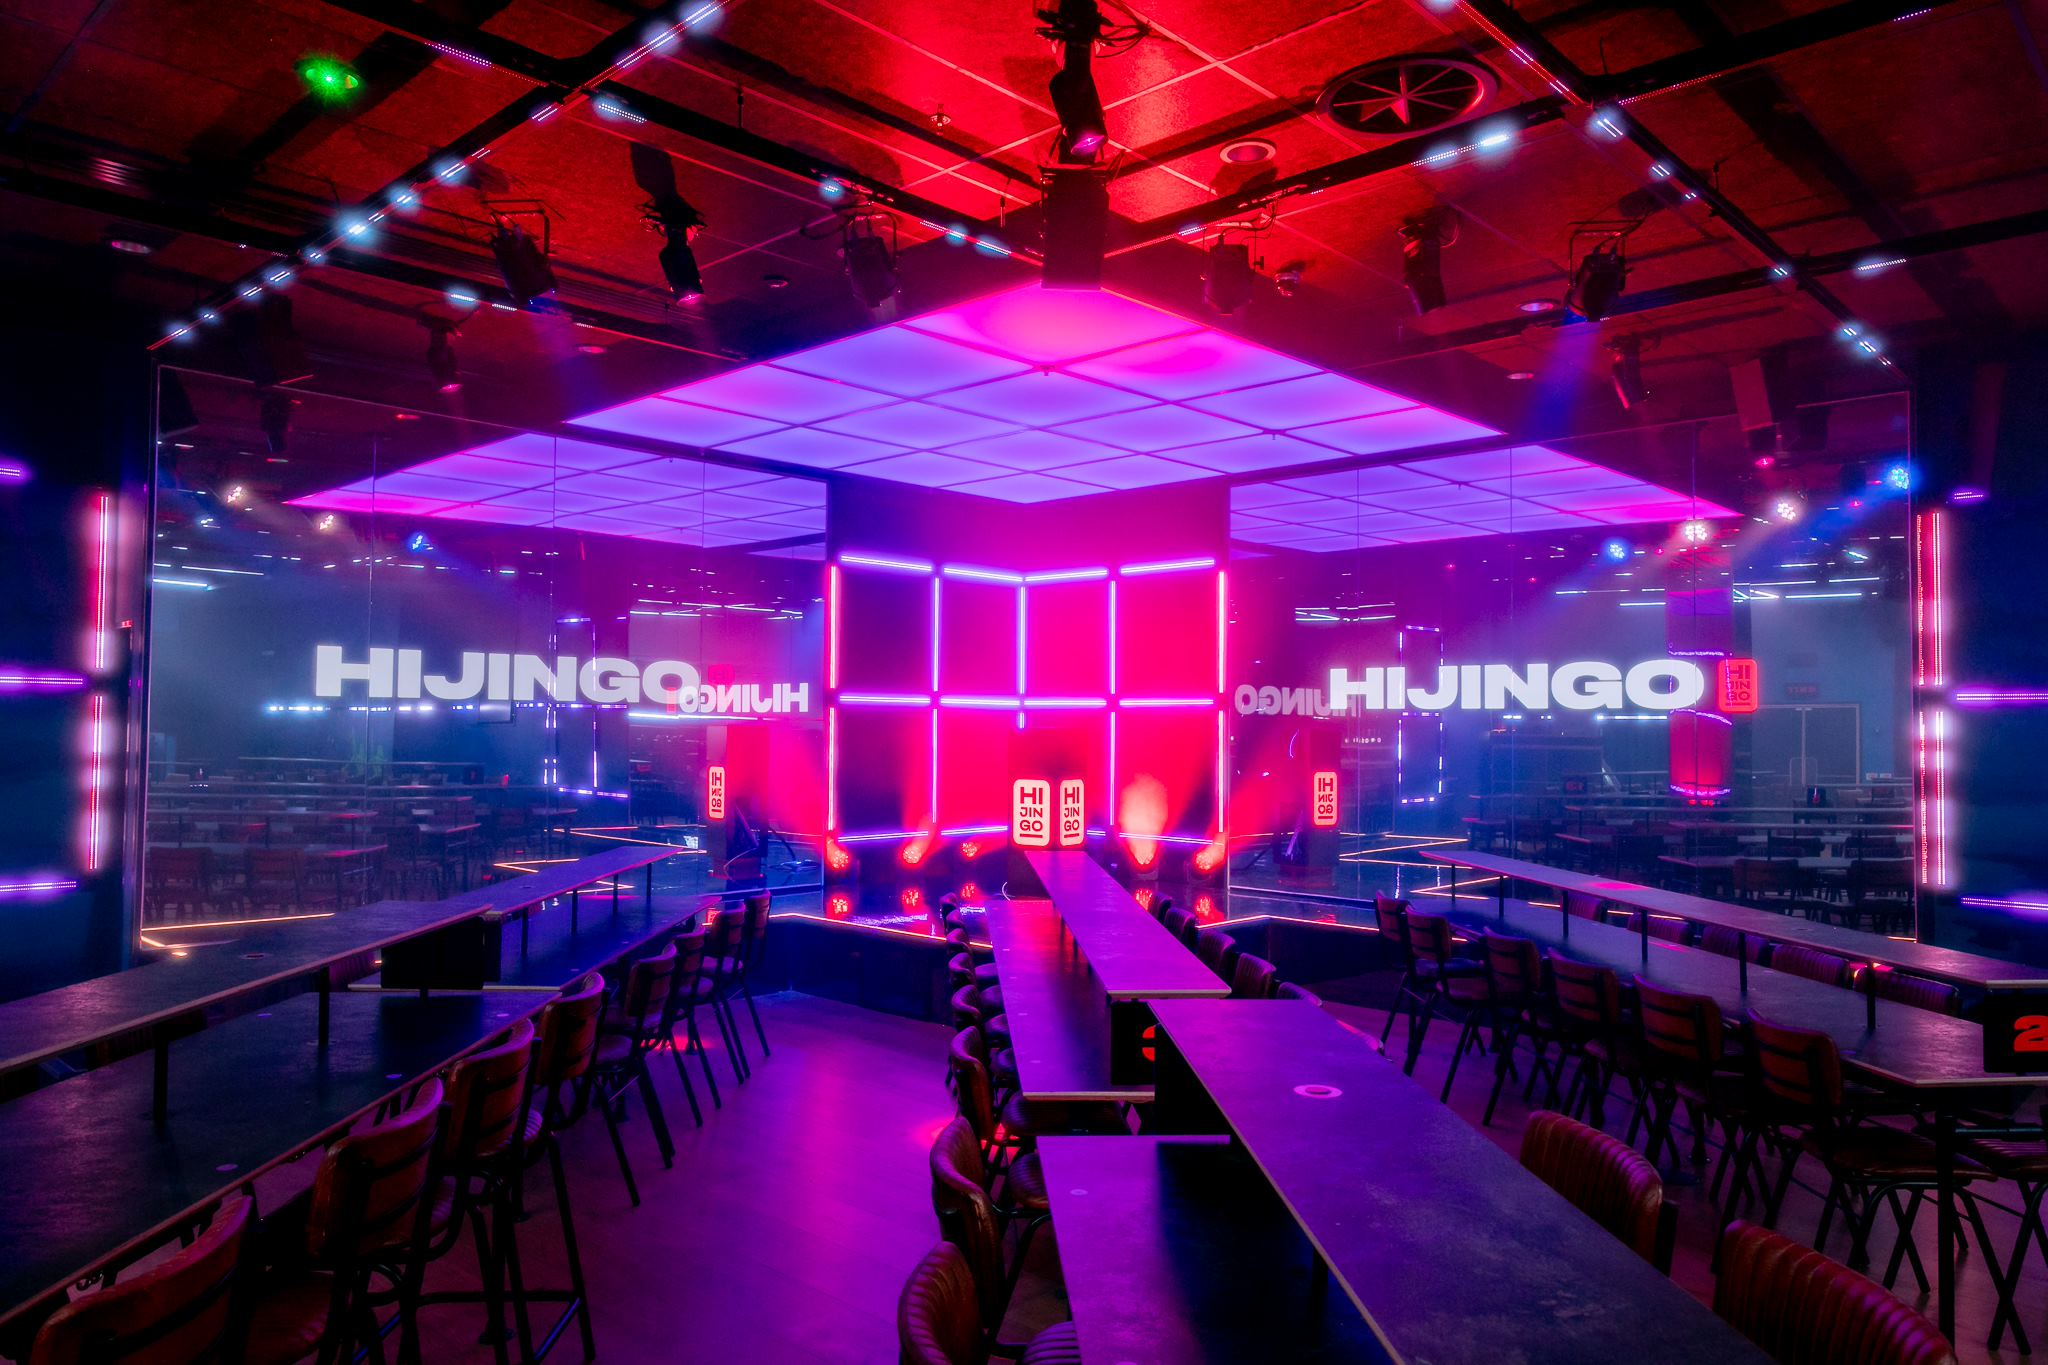 Hijingo Bingo, Shoreditch Header Image